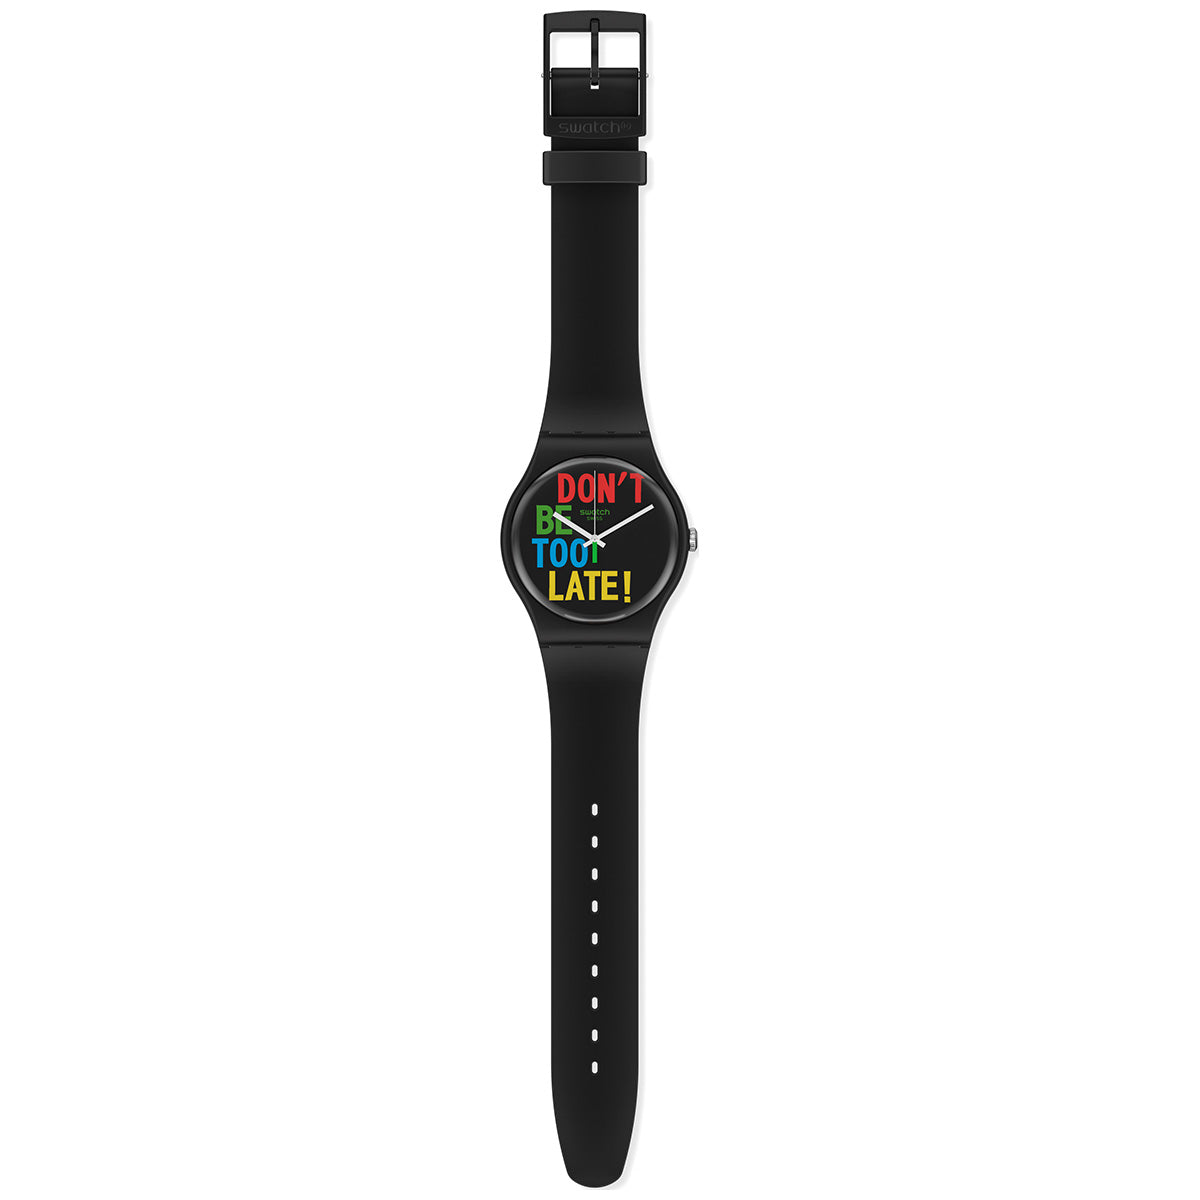 swatch スウォッチ 腕時計 メンズ レディース オリジナルズ ニュージェント タイムフォータイム Originals New Gent TIMEFORTIME SO29B100